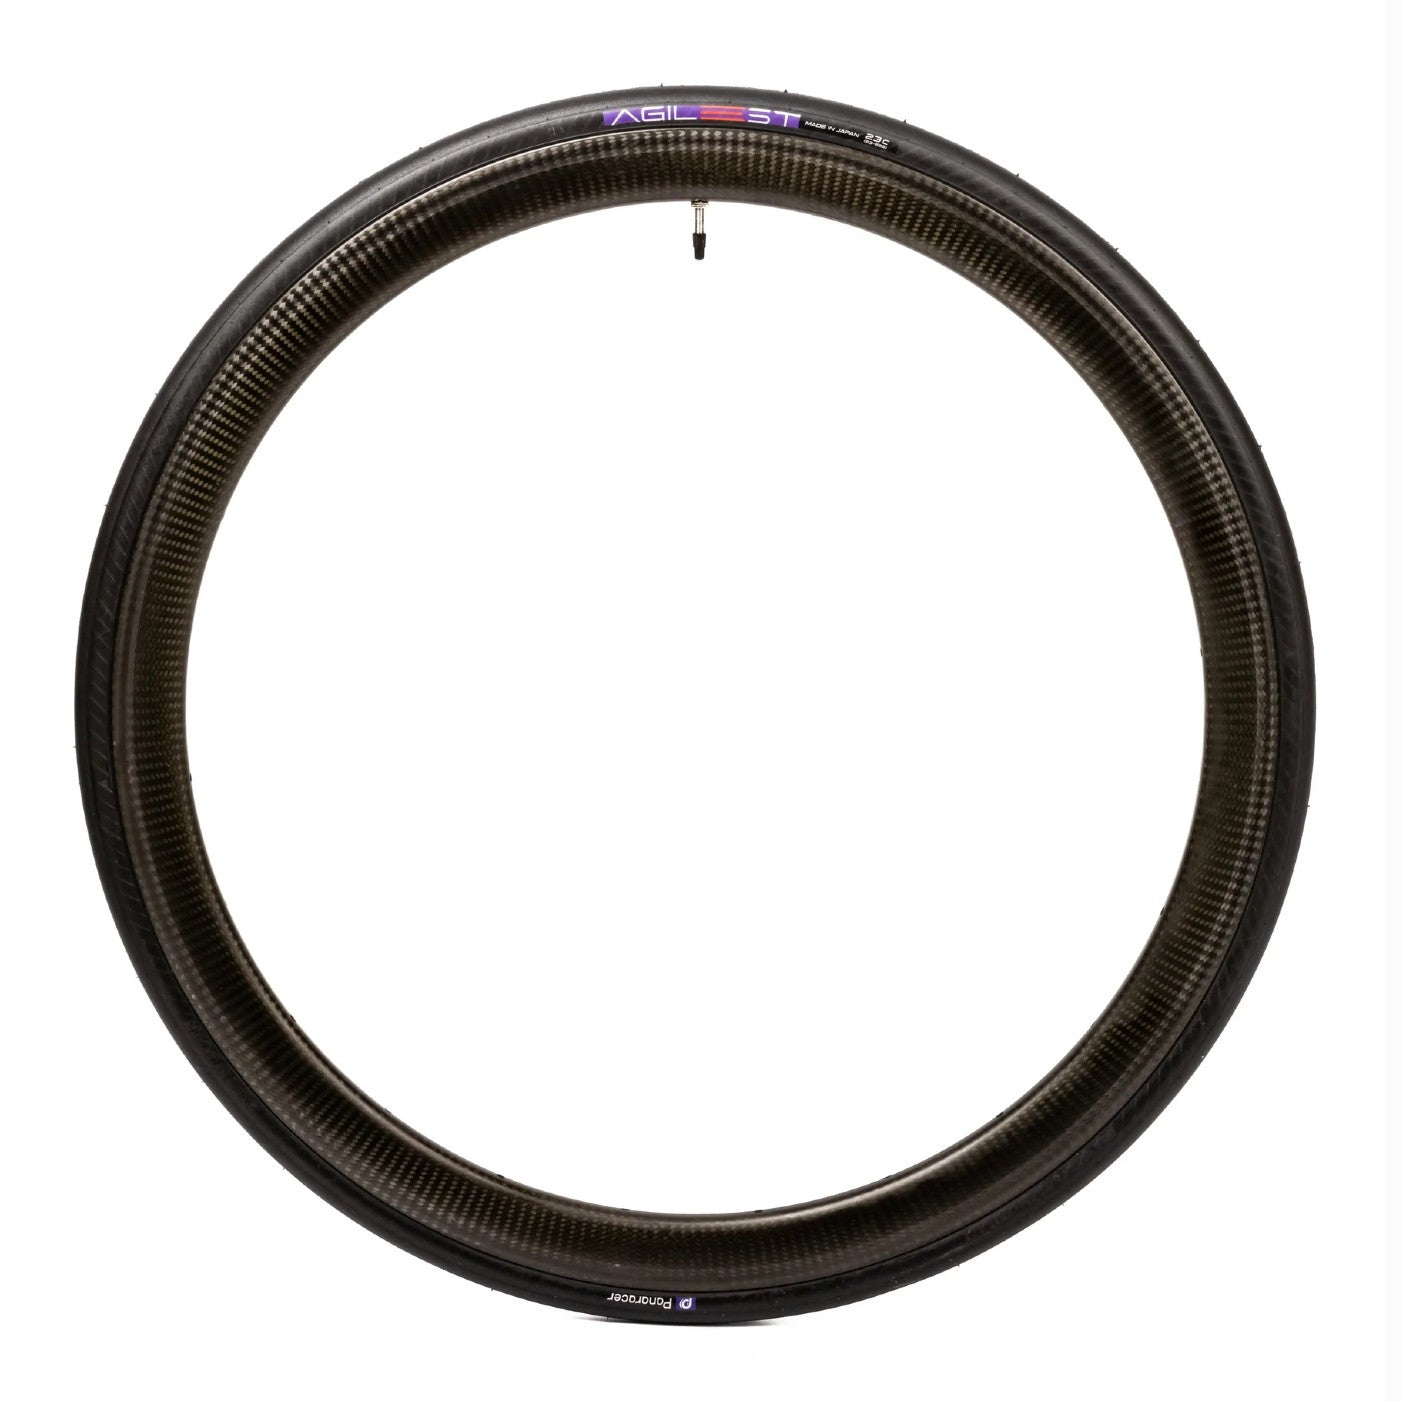 Panaracer Agilest Standard Tough & Supple Road Bike Tire (RF723-AG-B) - Black